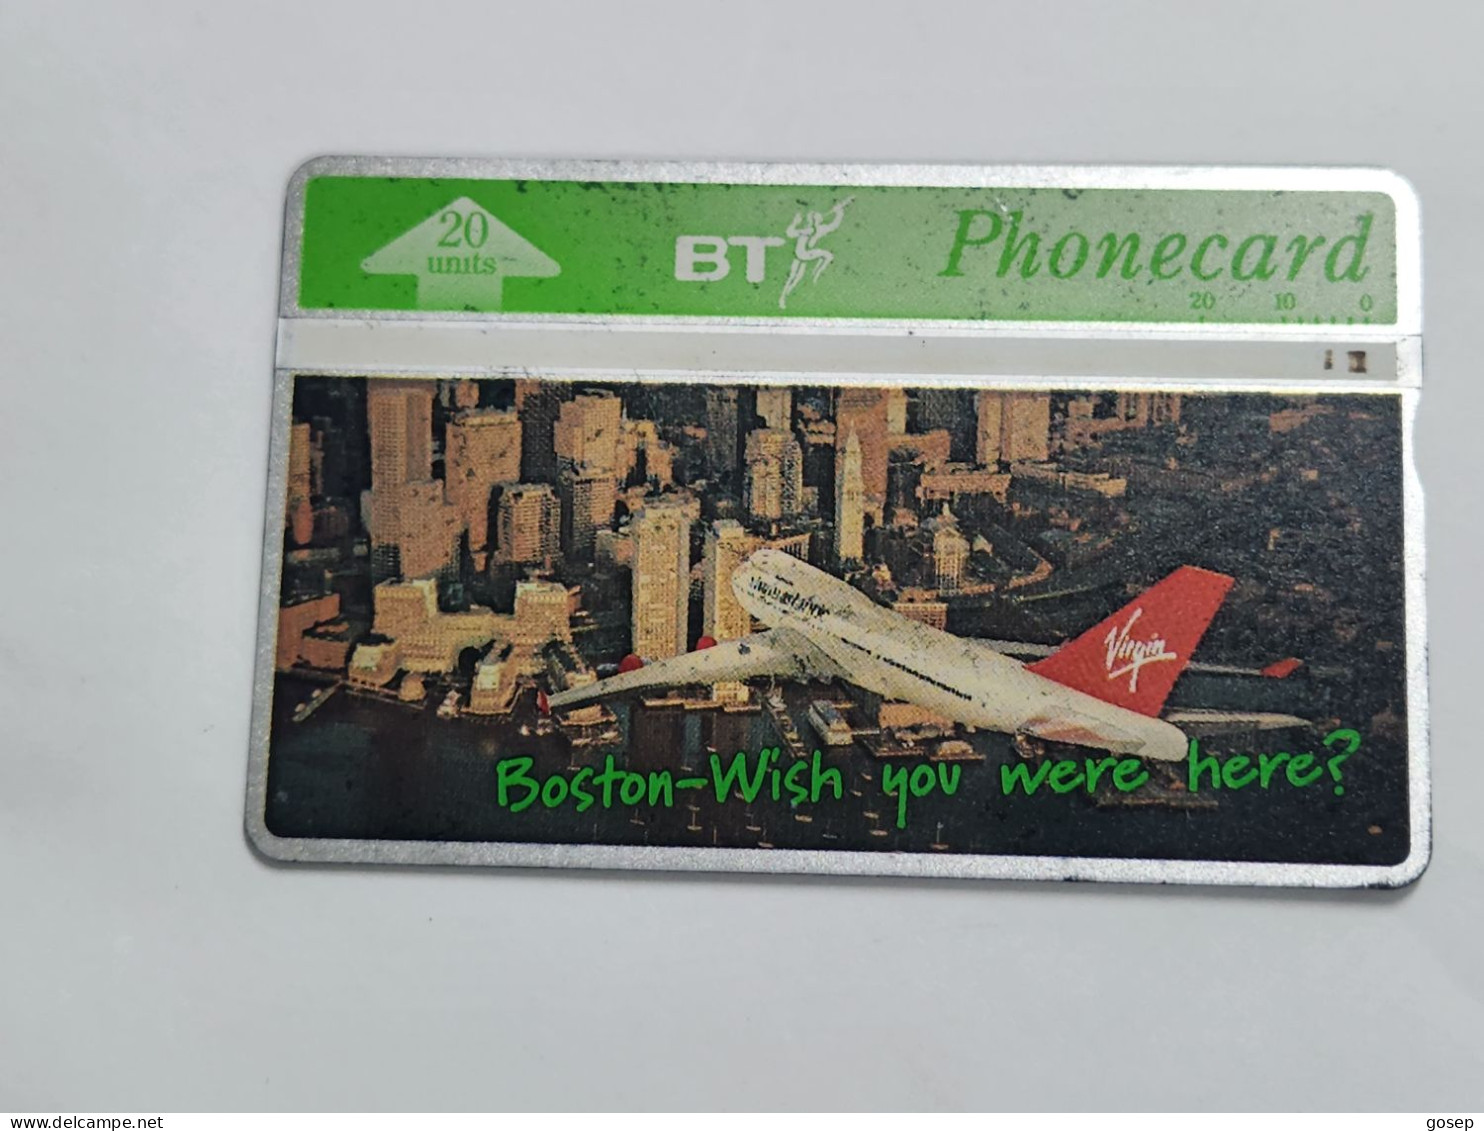 United Kingdom-(BTA136)-Virgin Atlantic-BOTSON-(655)(20units)(550K25092)price Cataloge1.50£-used+1card Prepiad Free - BT Advertising Issues